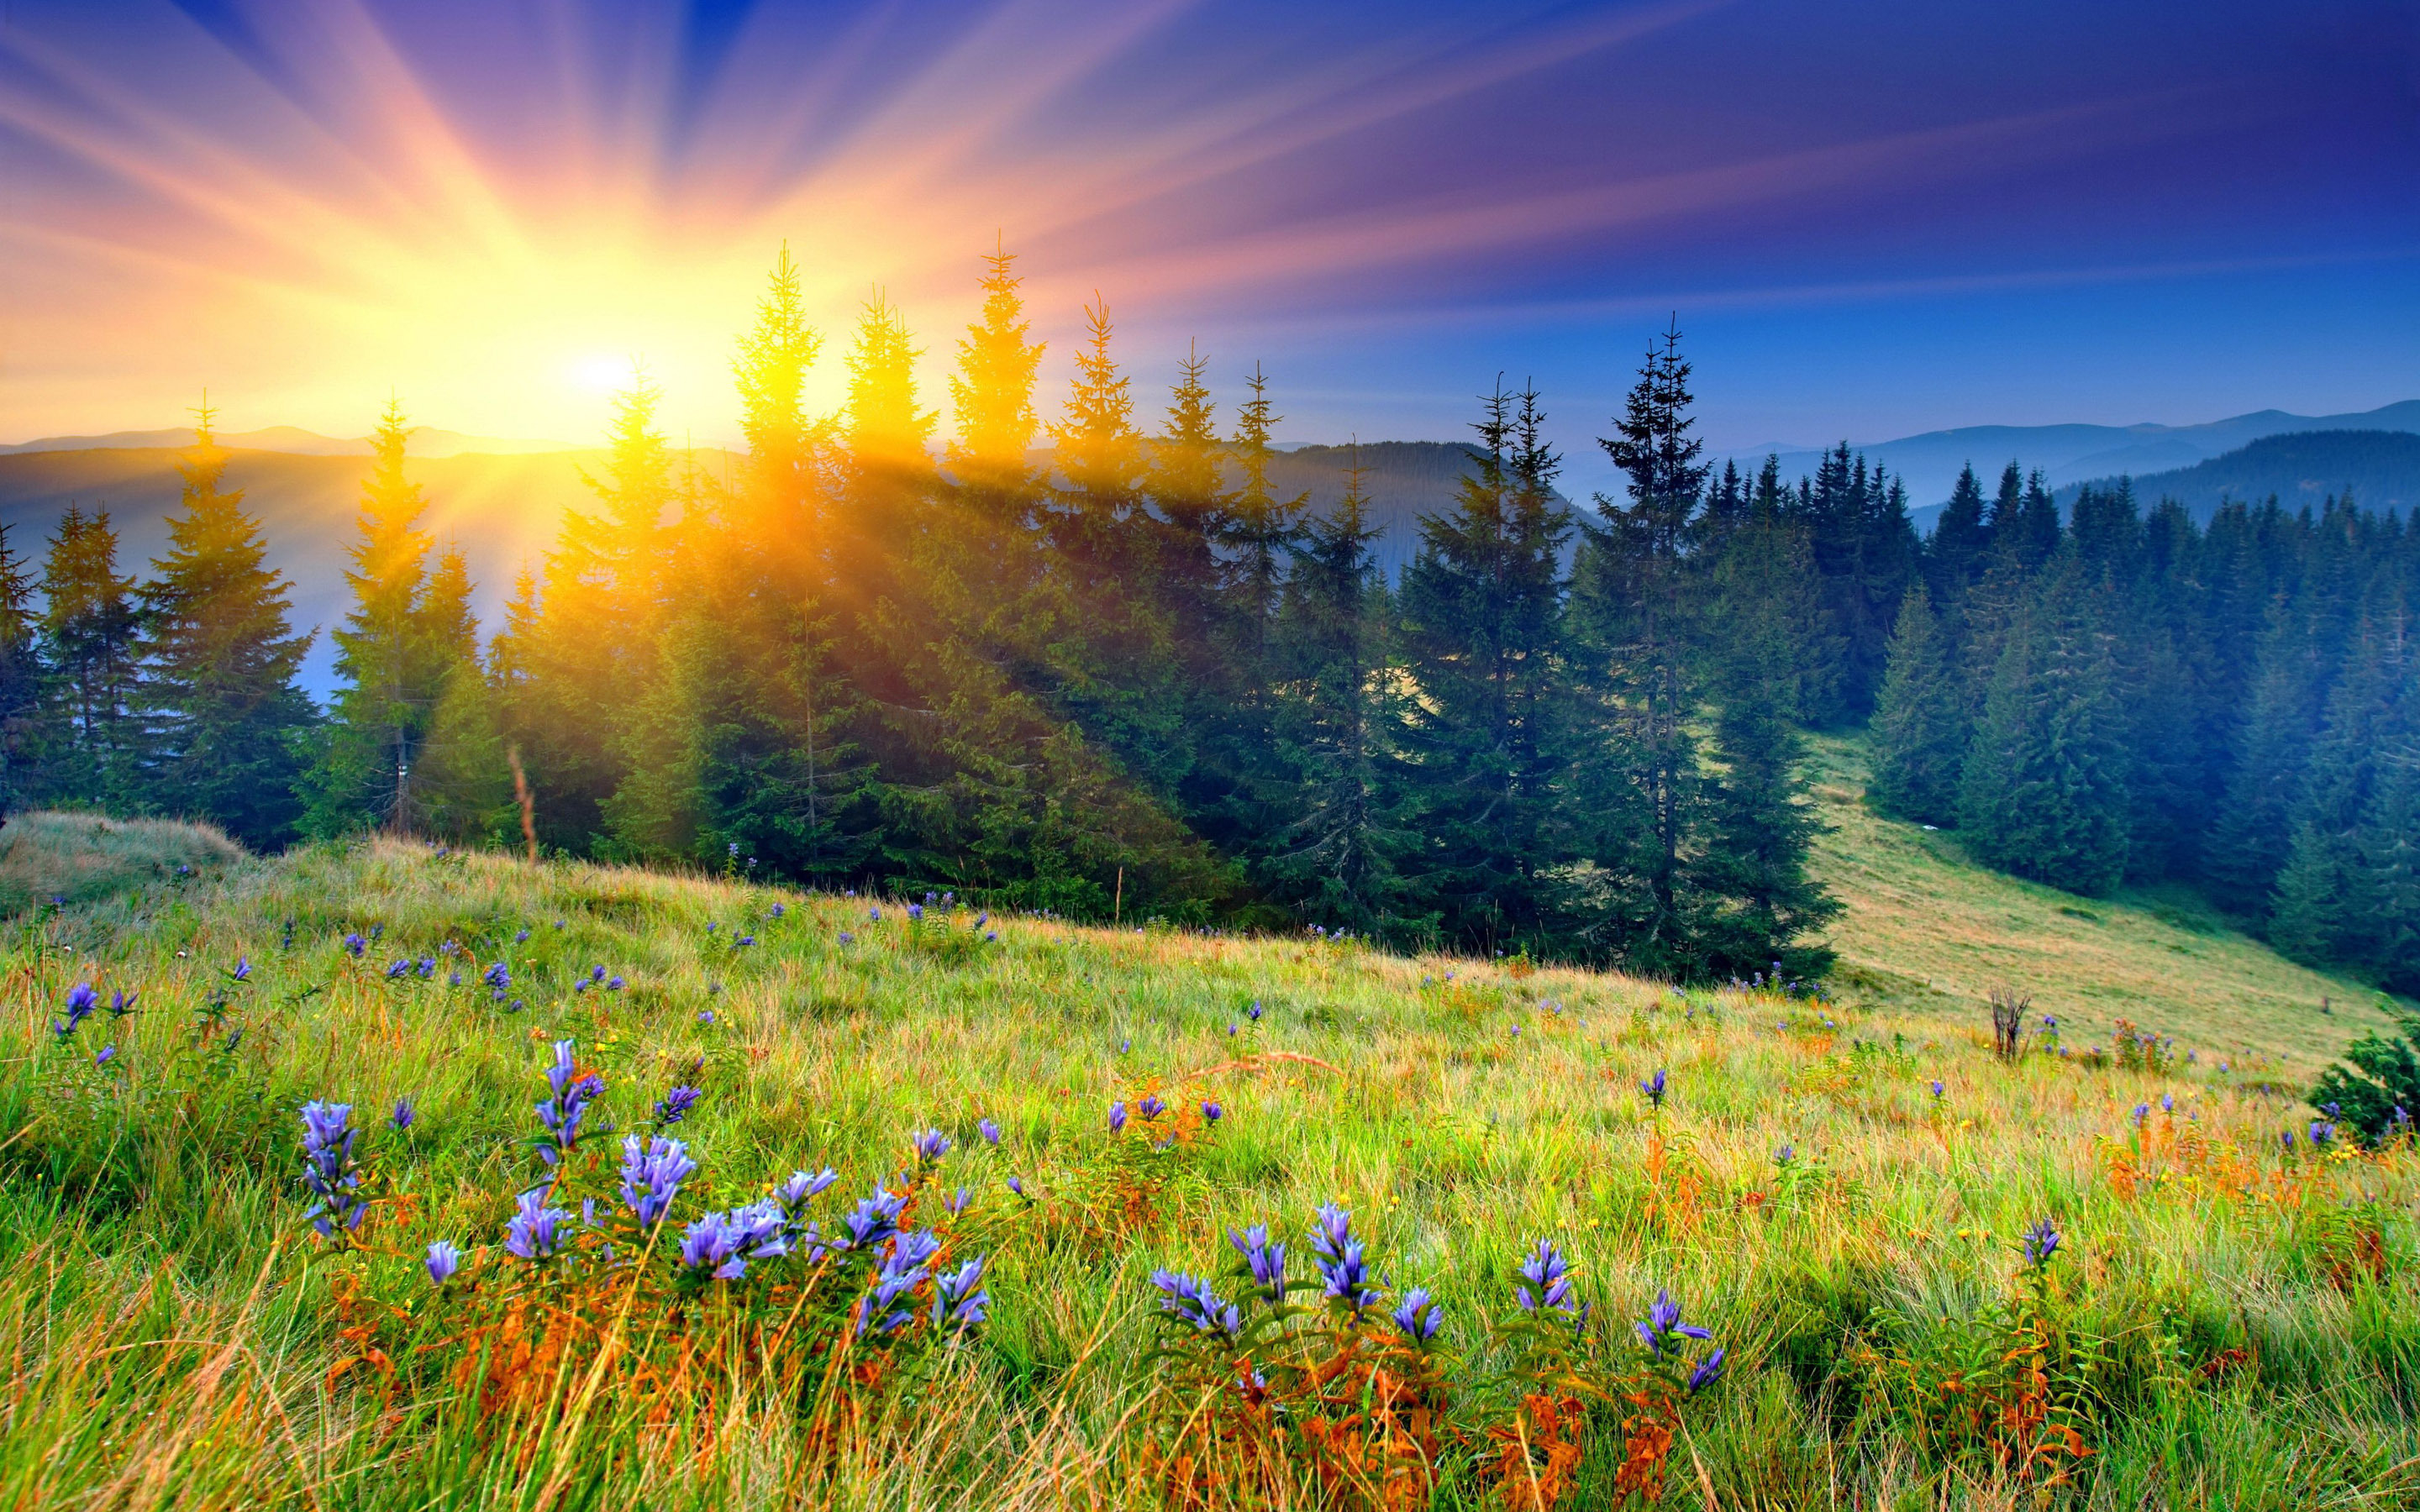 Download Sunbeam Tree Flower Field Mountain Sunset Nature Landscape Hd